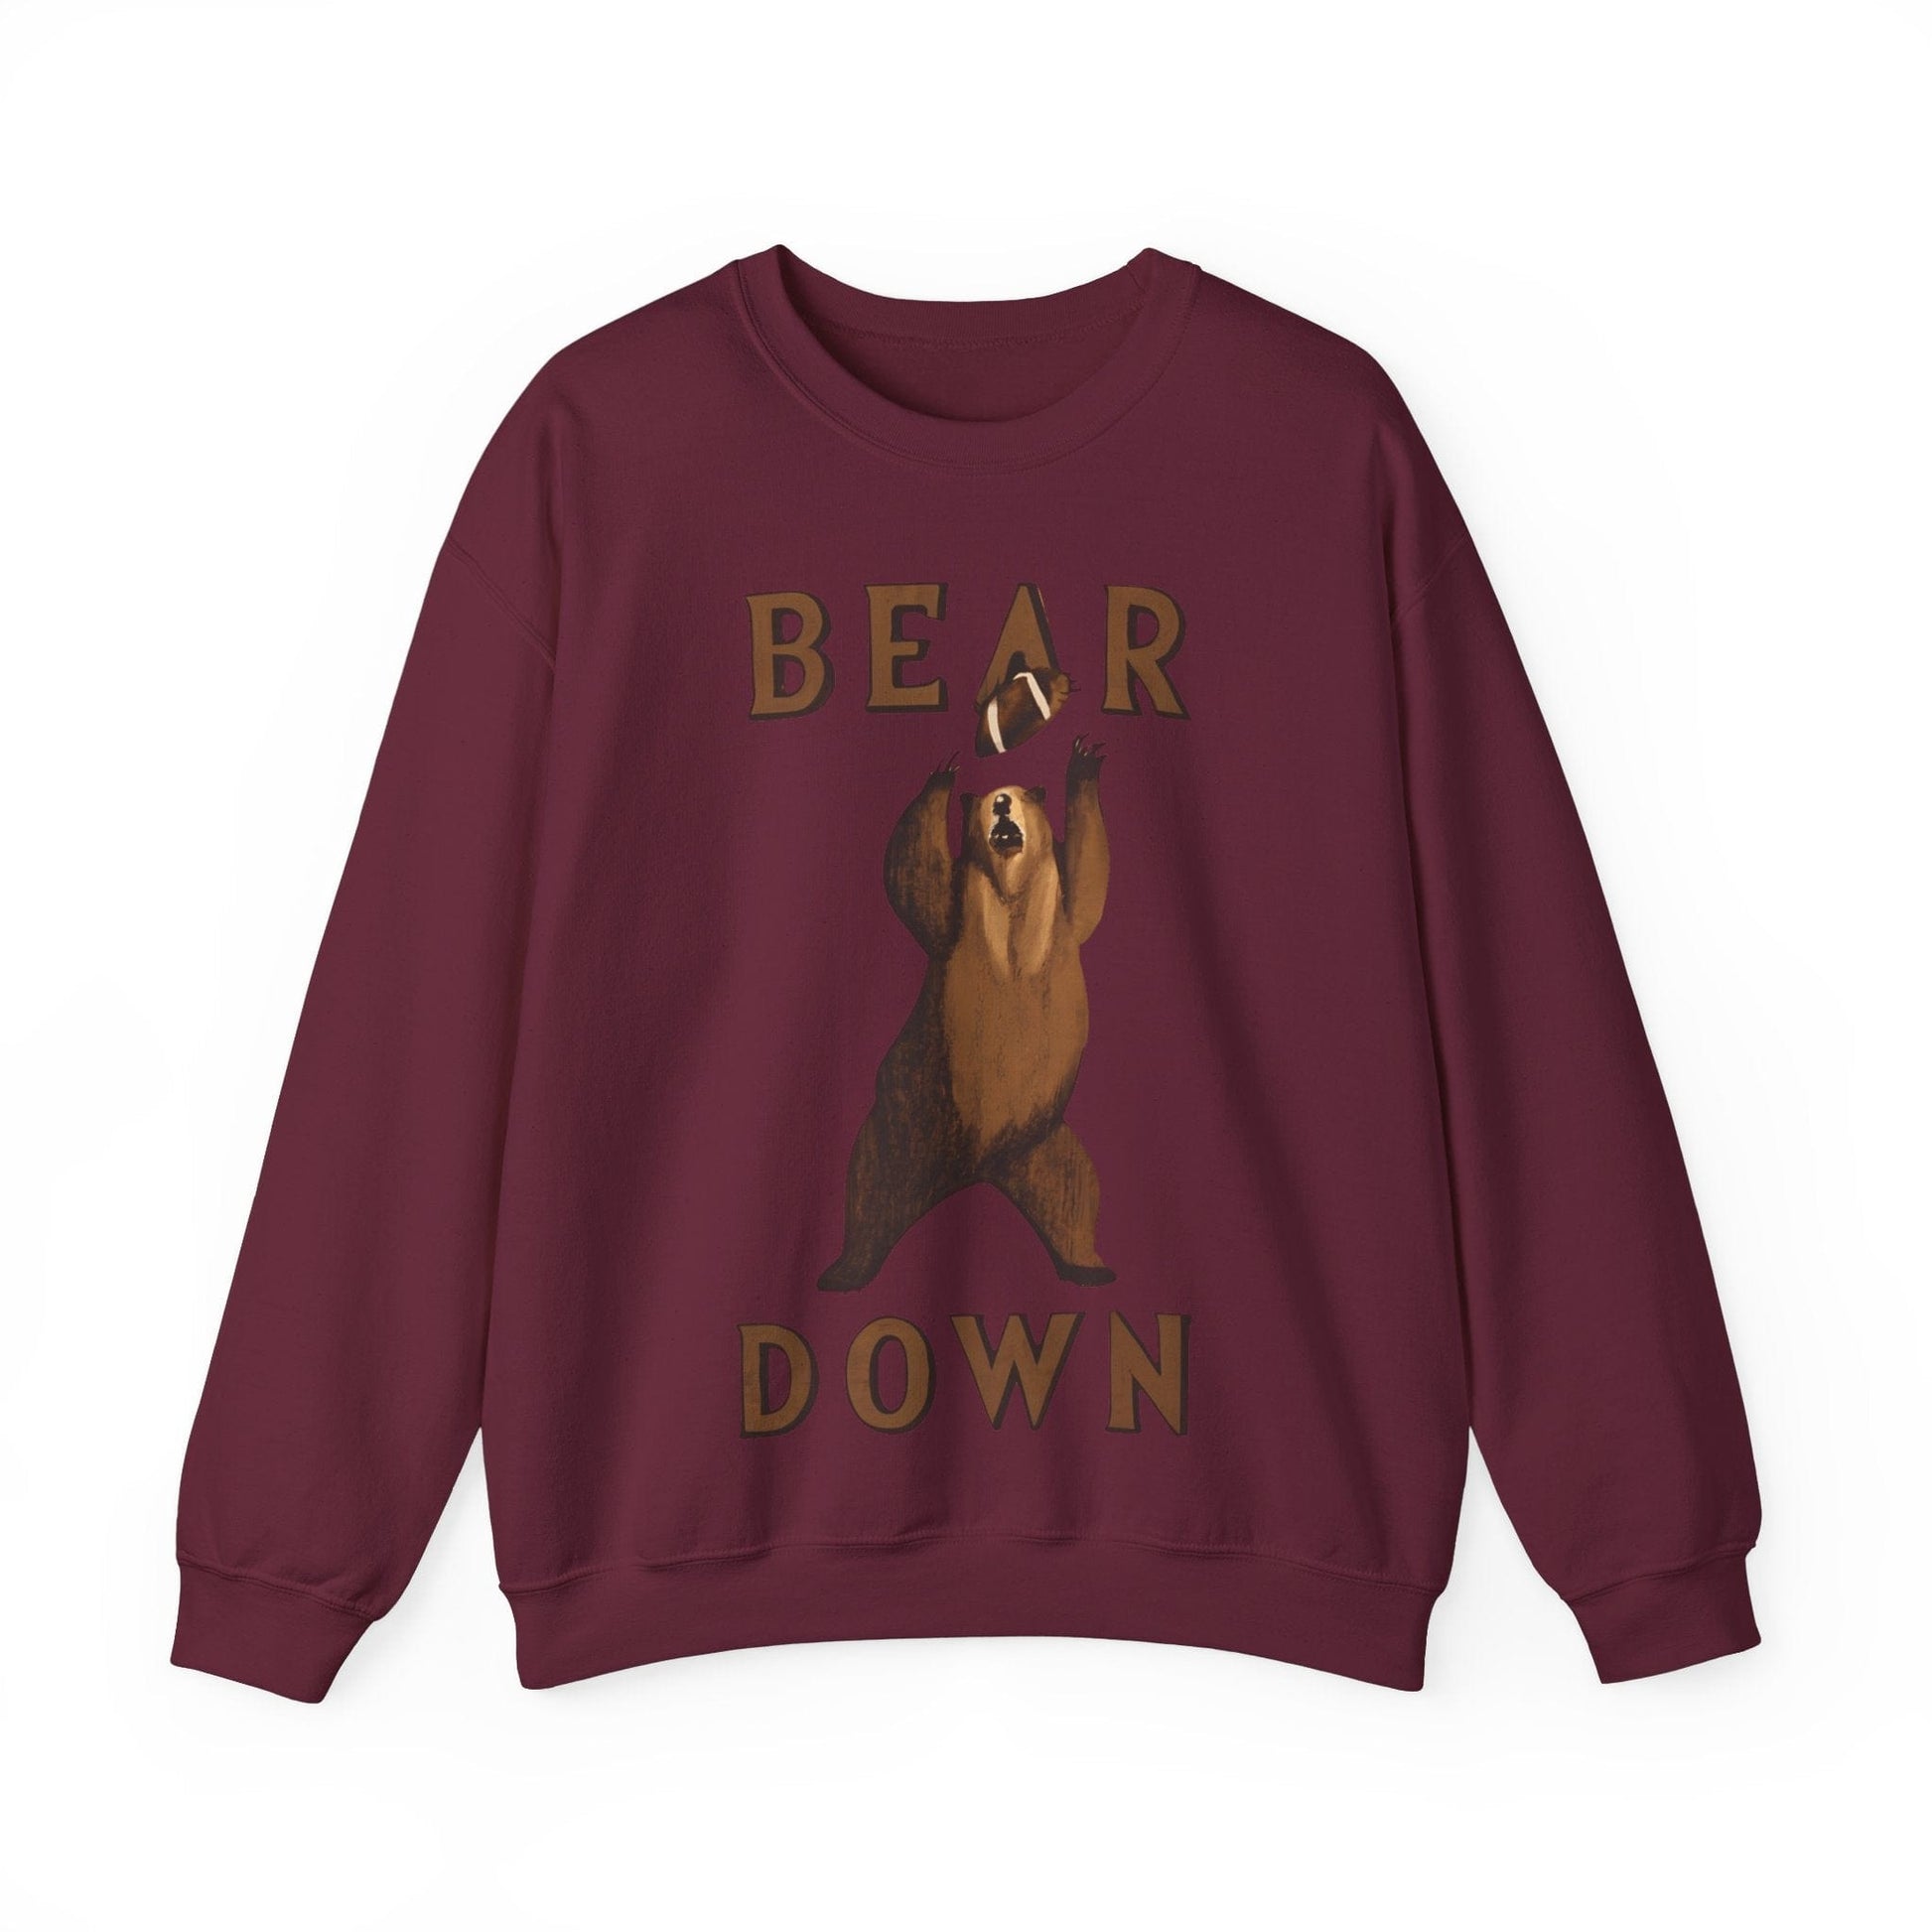 Sweatshirt S / Maroon Bear Down Vintage Sweatshirt